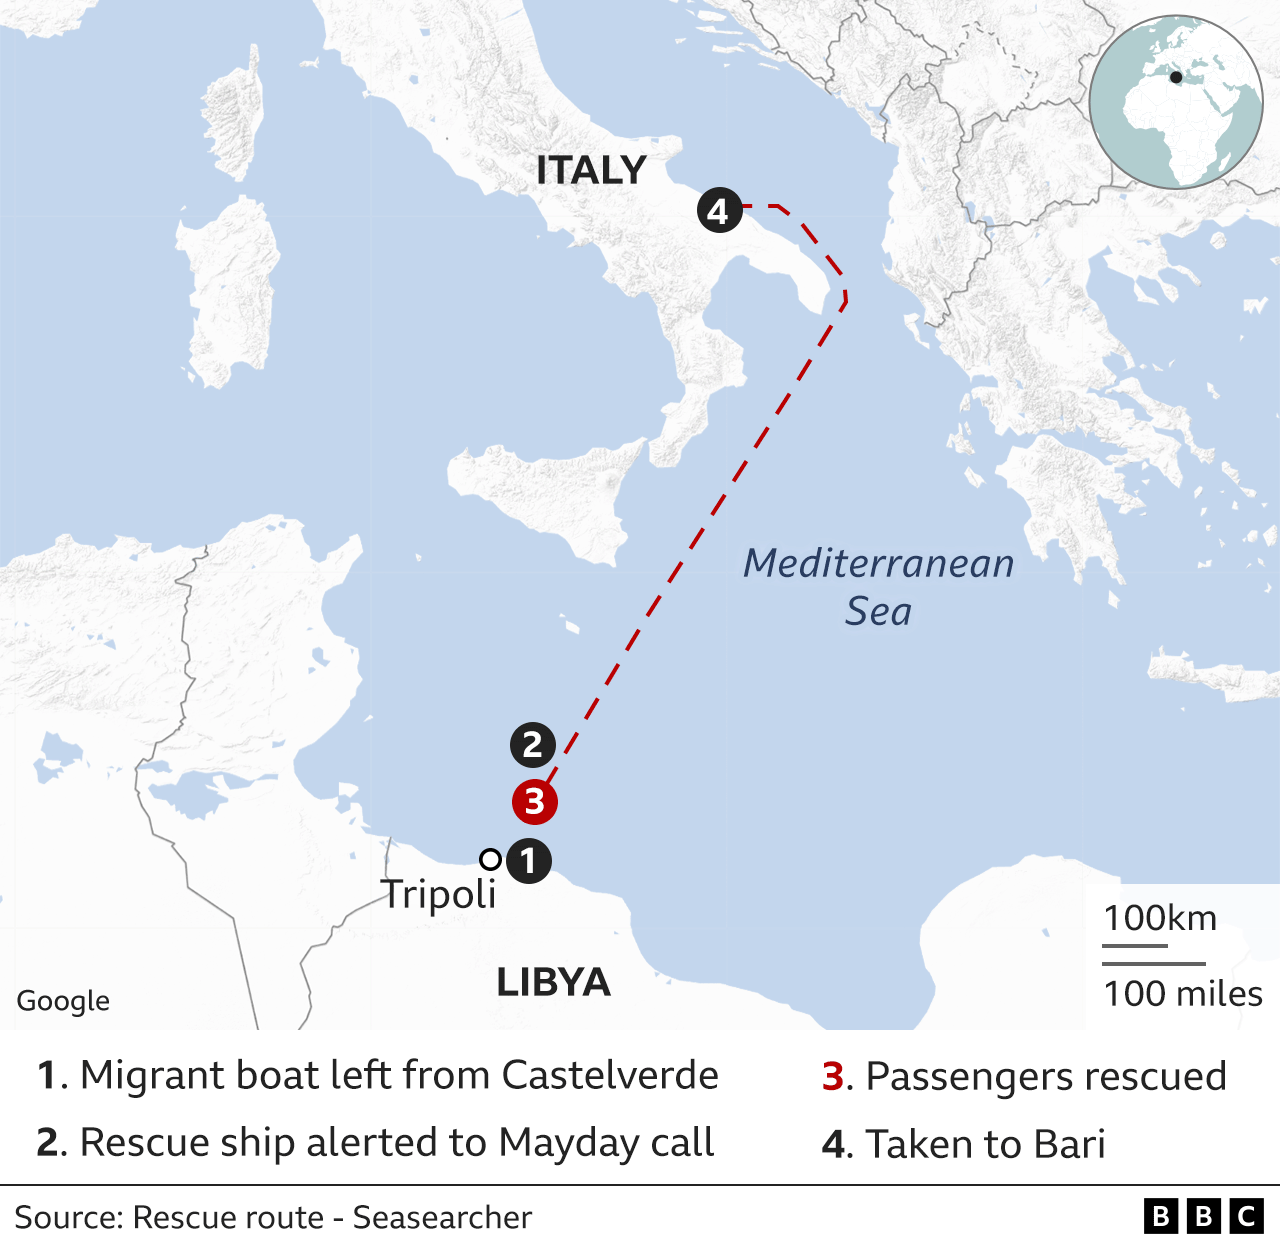 Mediterranean Sea - BBC News